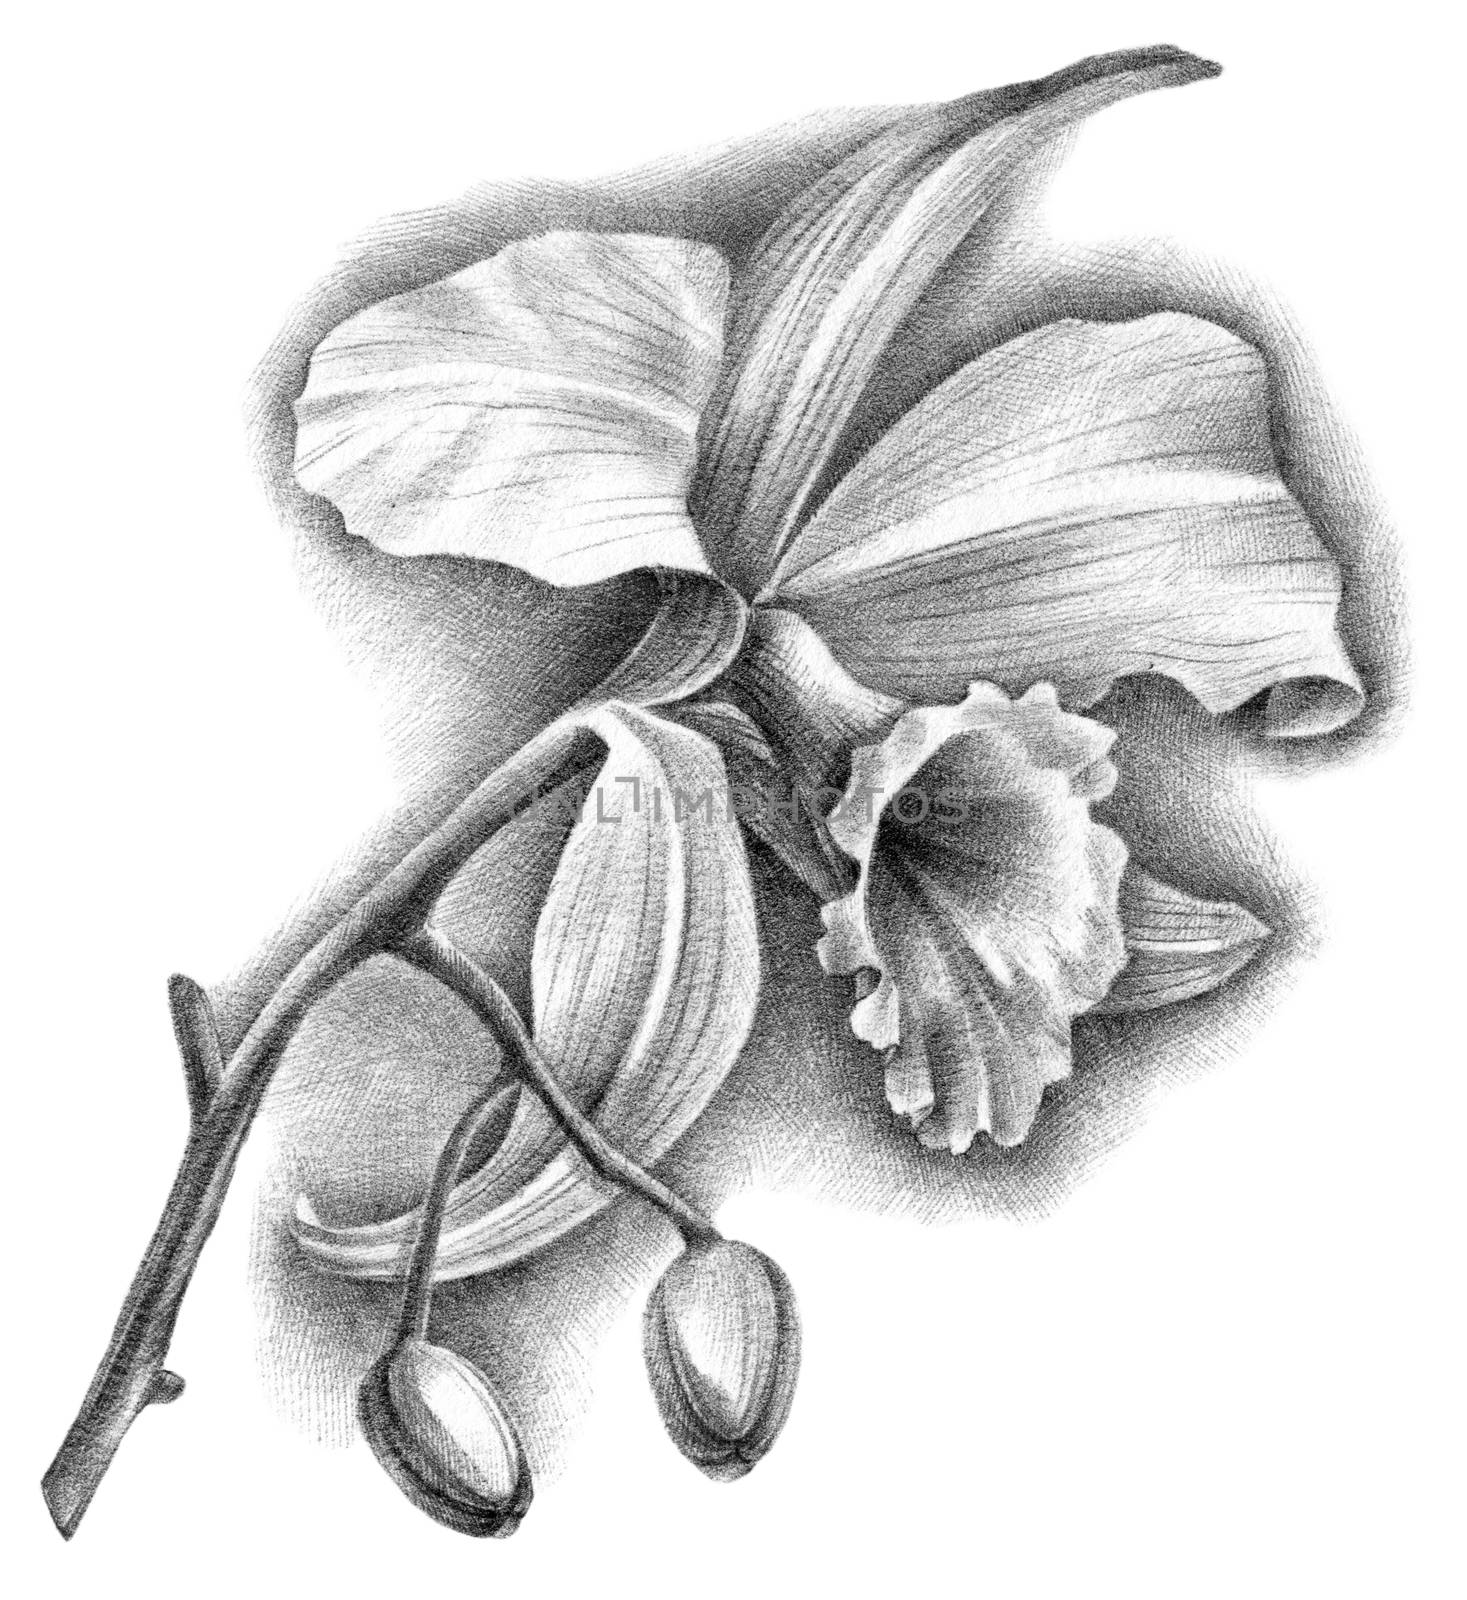 Illustration of cattleya orchid flower by Olatarakanova